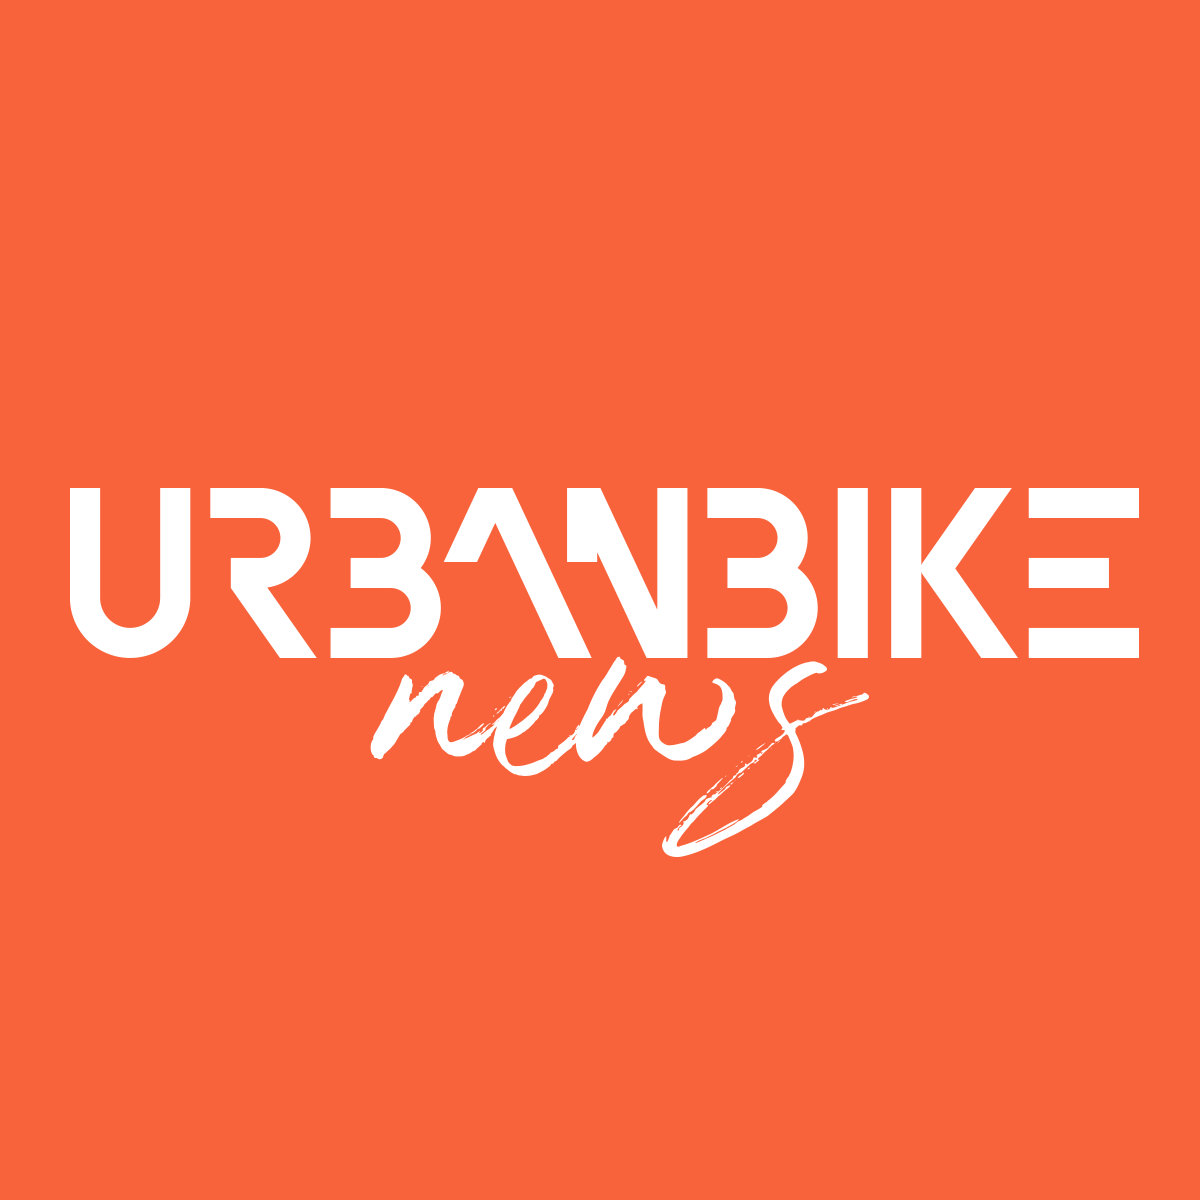 (c) Urbanbike.news